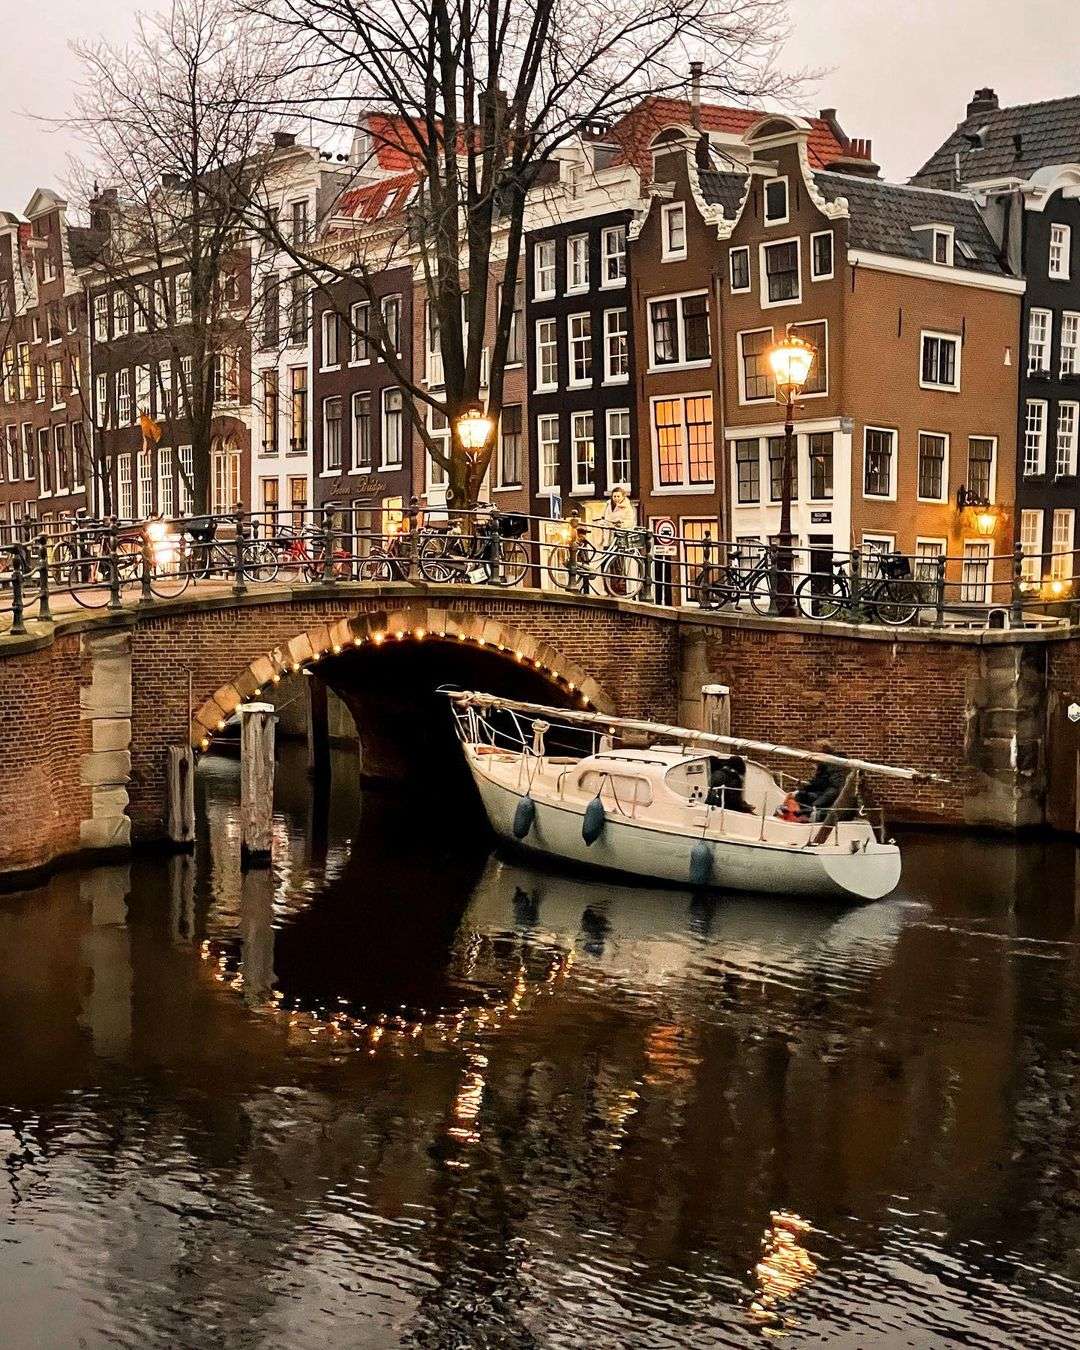 Cute sailboat tour through Amstelveense canals